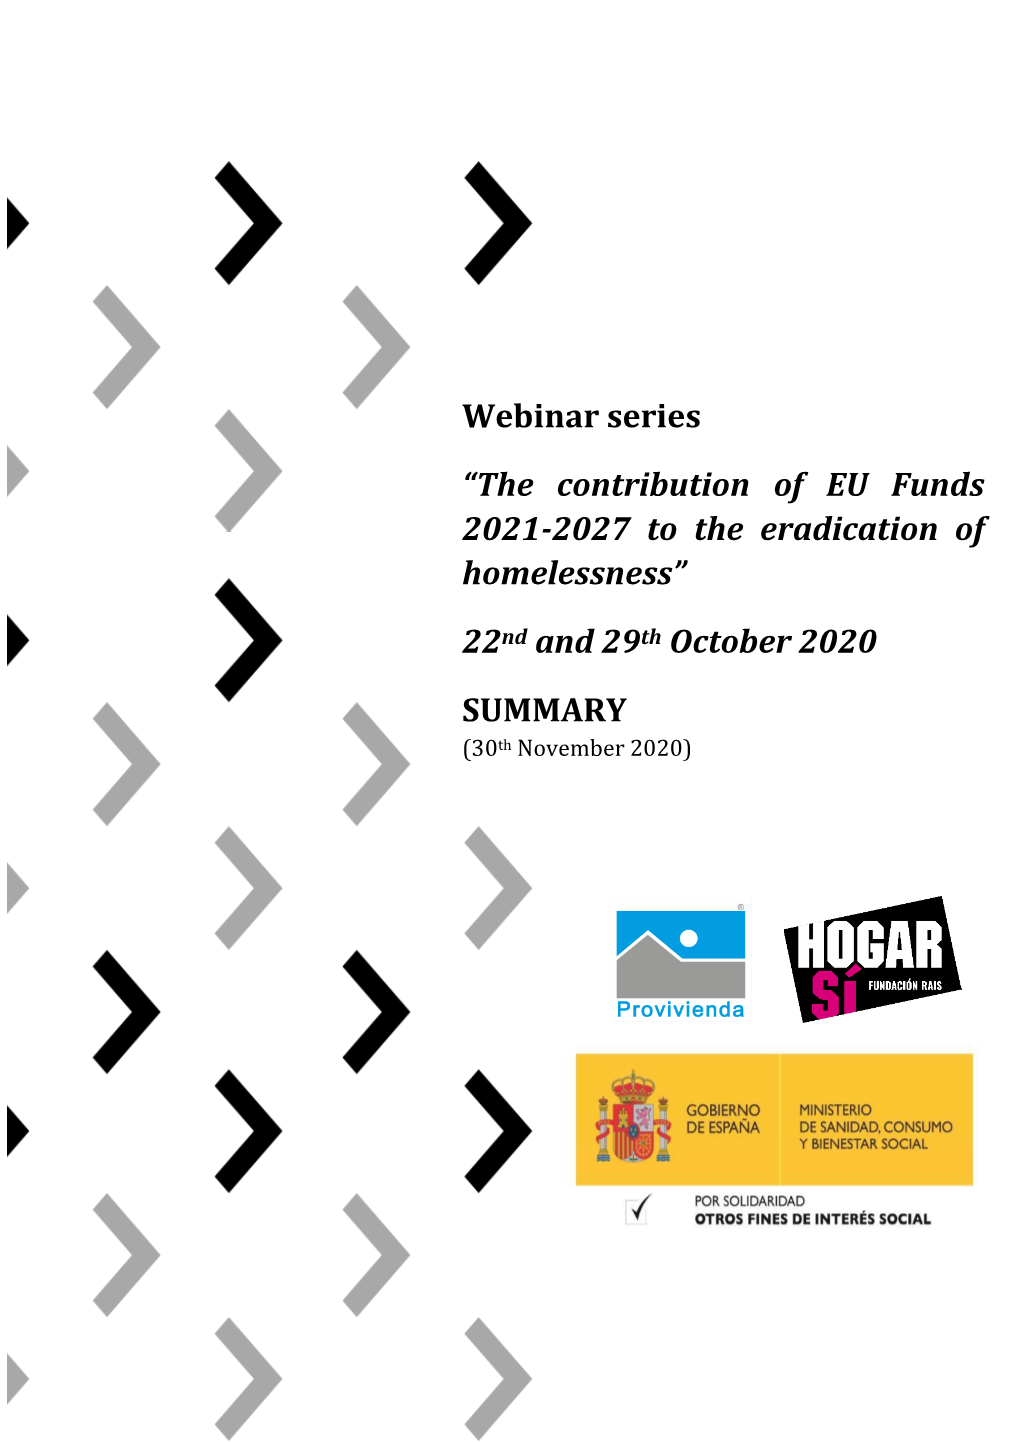 Webinar Series “The Contribution of EU Funds 2021-2027 to the Eradication of Homelessness”